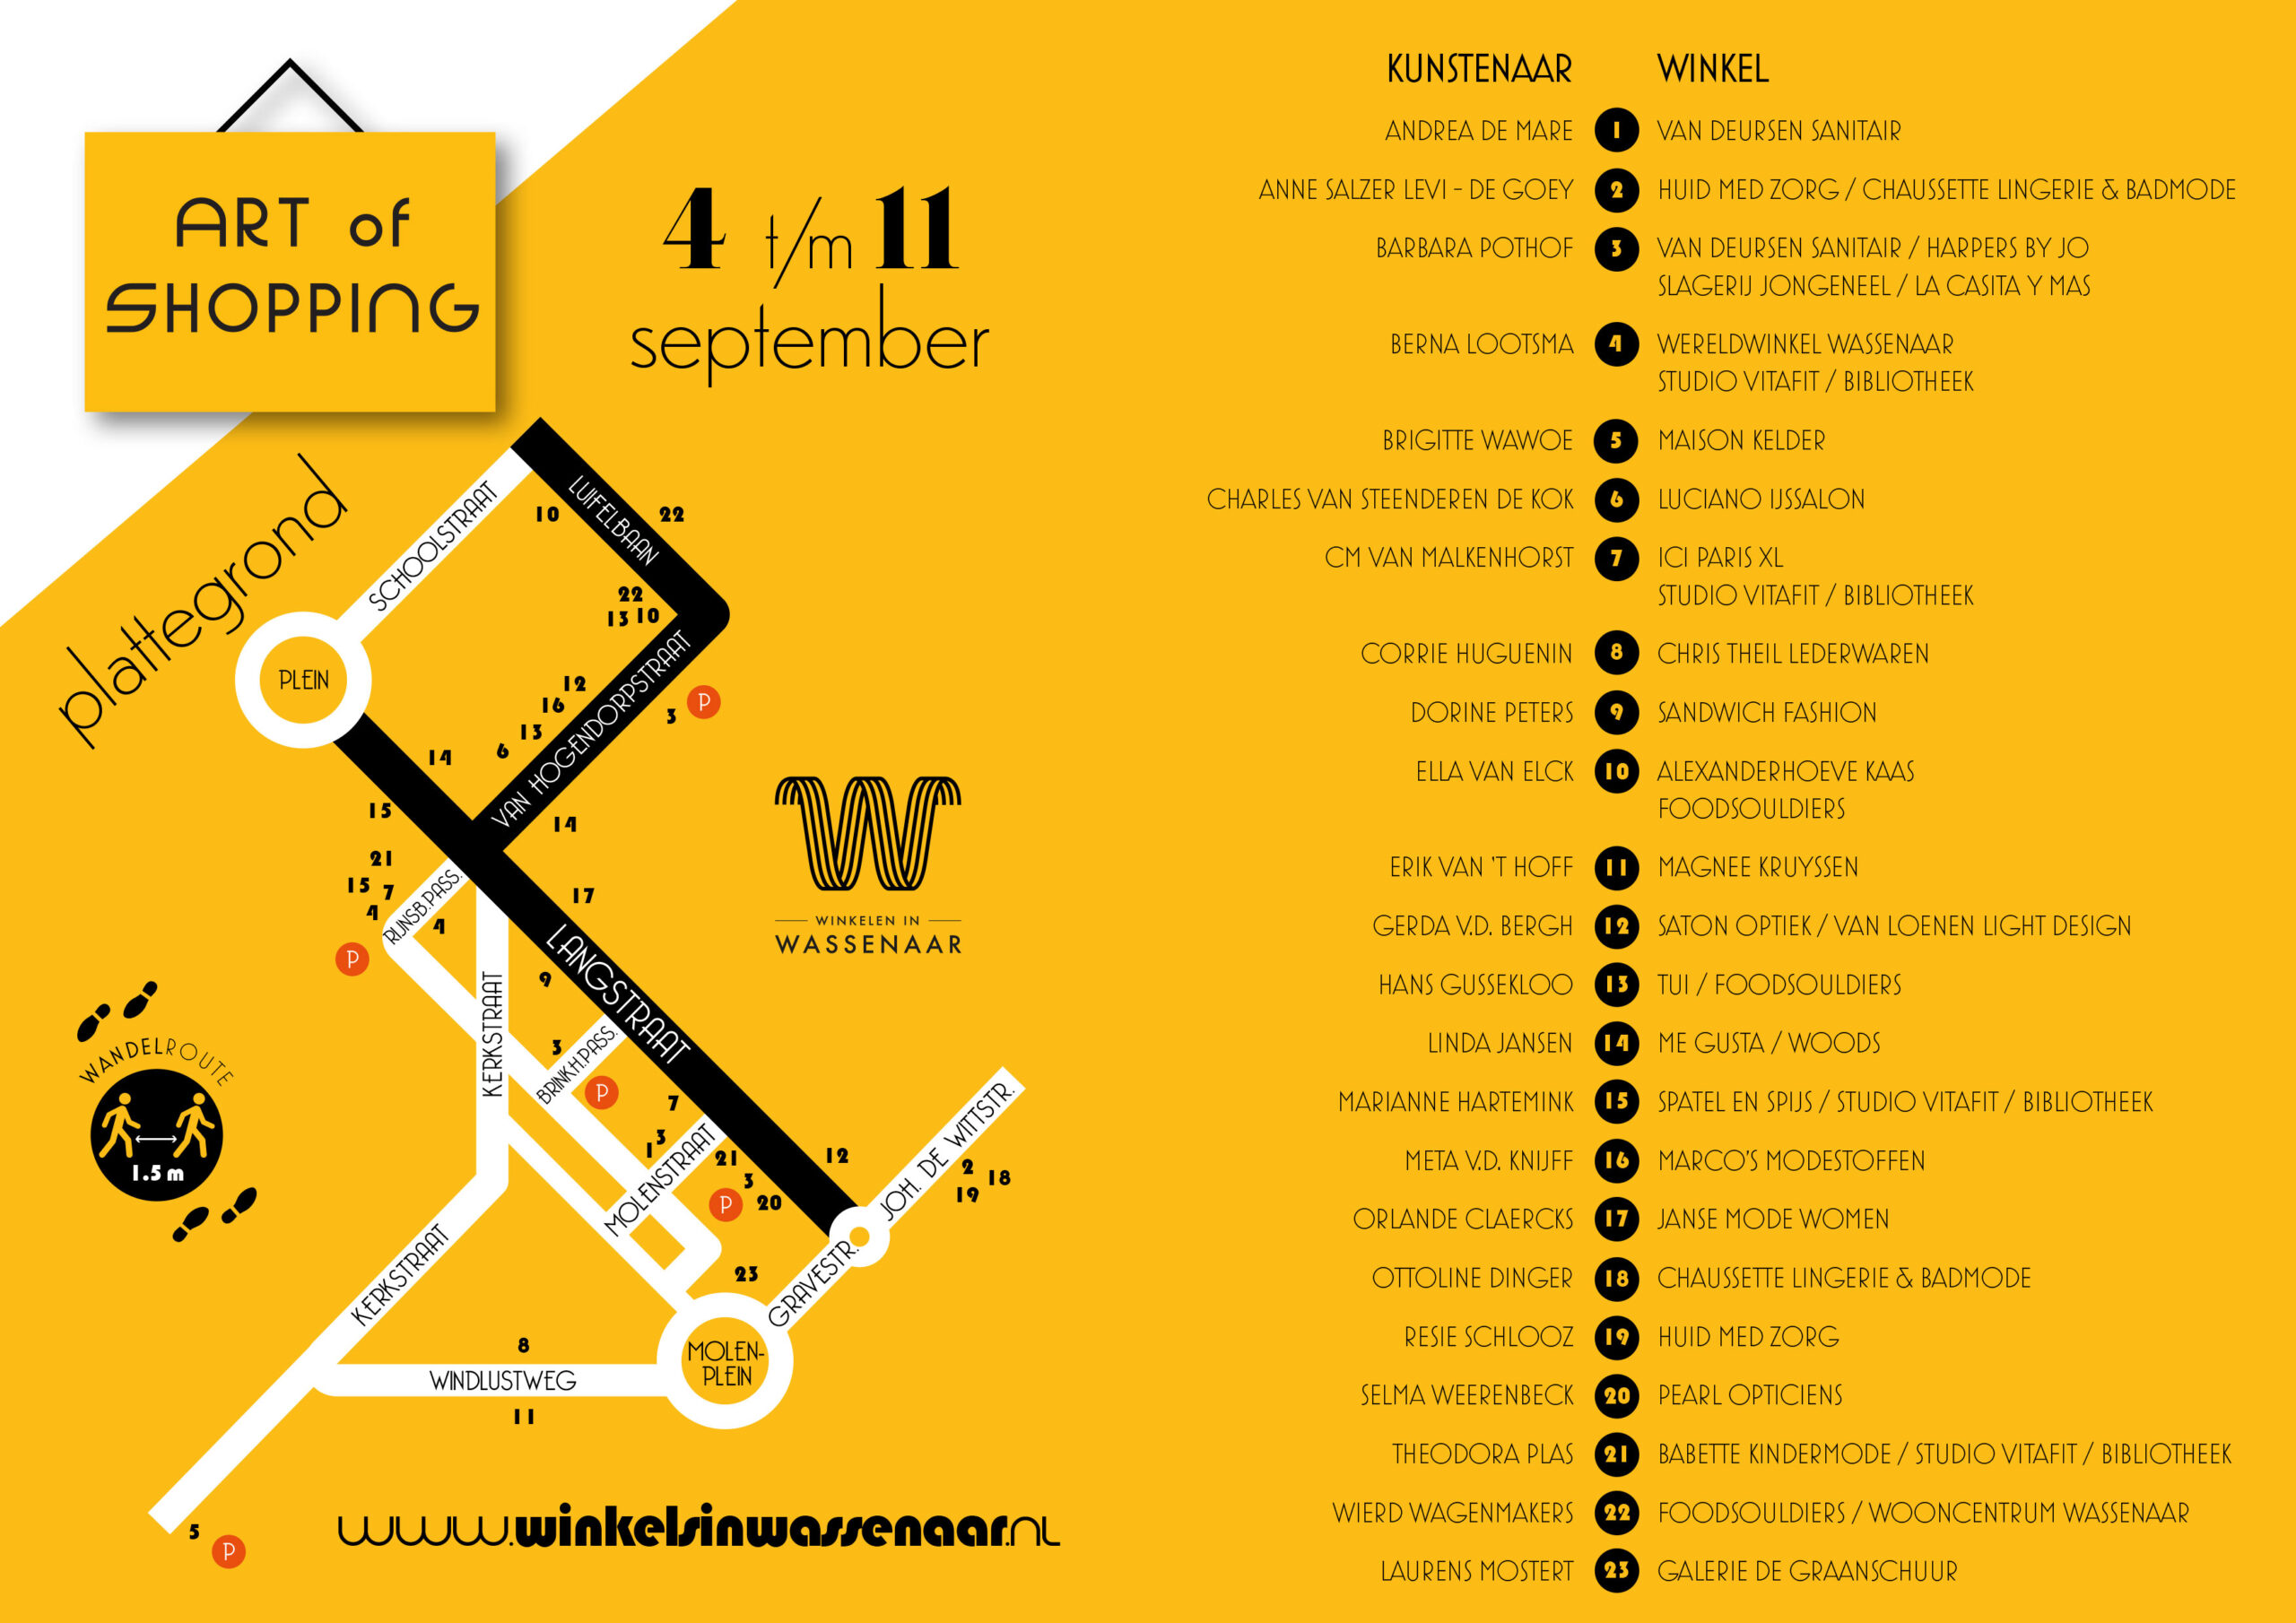 Cultuurfestival Art of shopping Cultuuranker Wassenaar MVO in de Regio 2